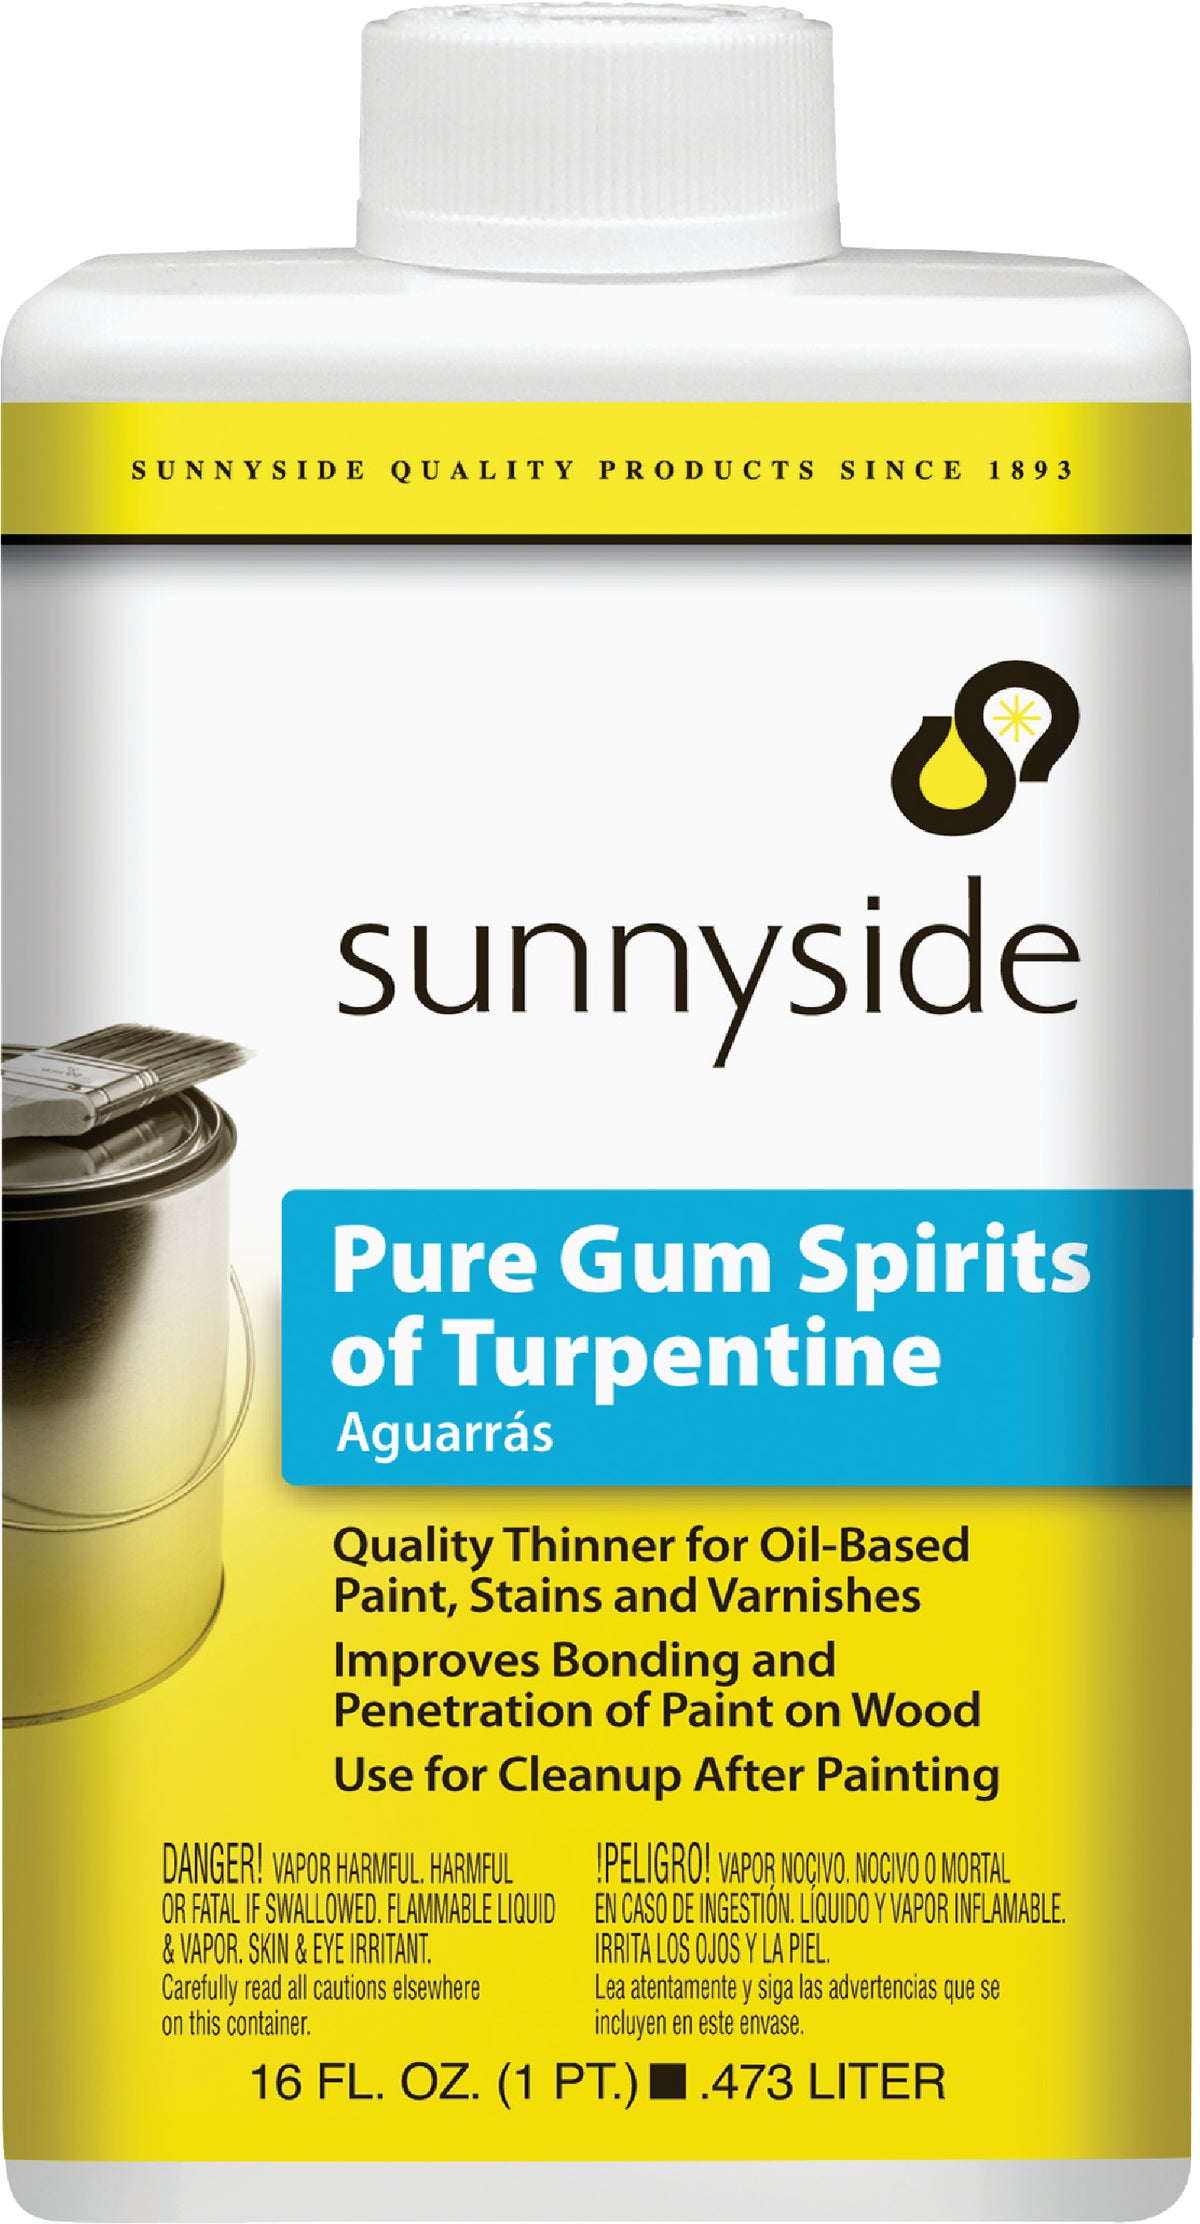 Buy Sunnyside Pure Gum Spirits Turpentine 1 Pt.